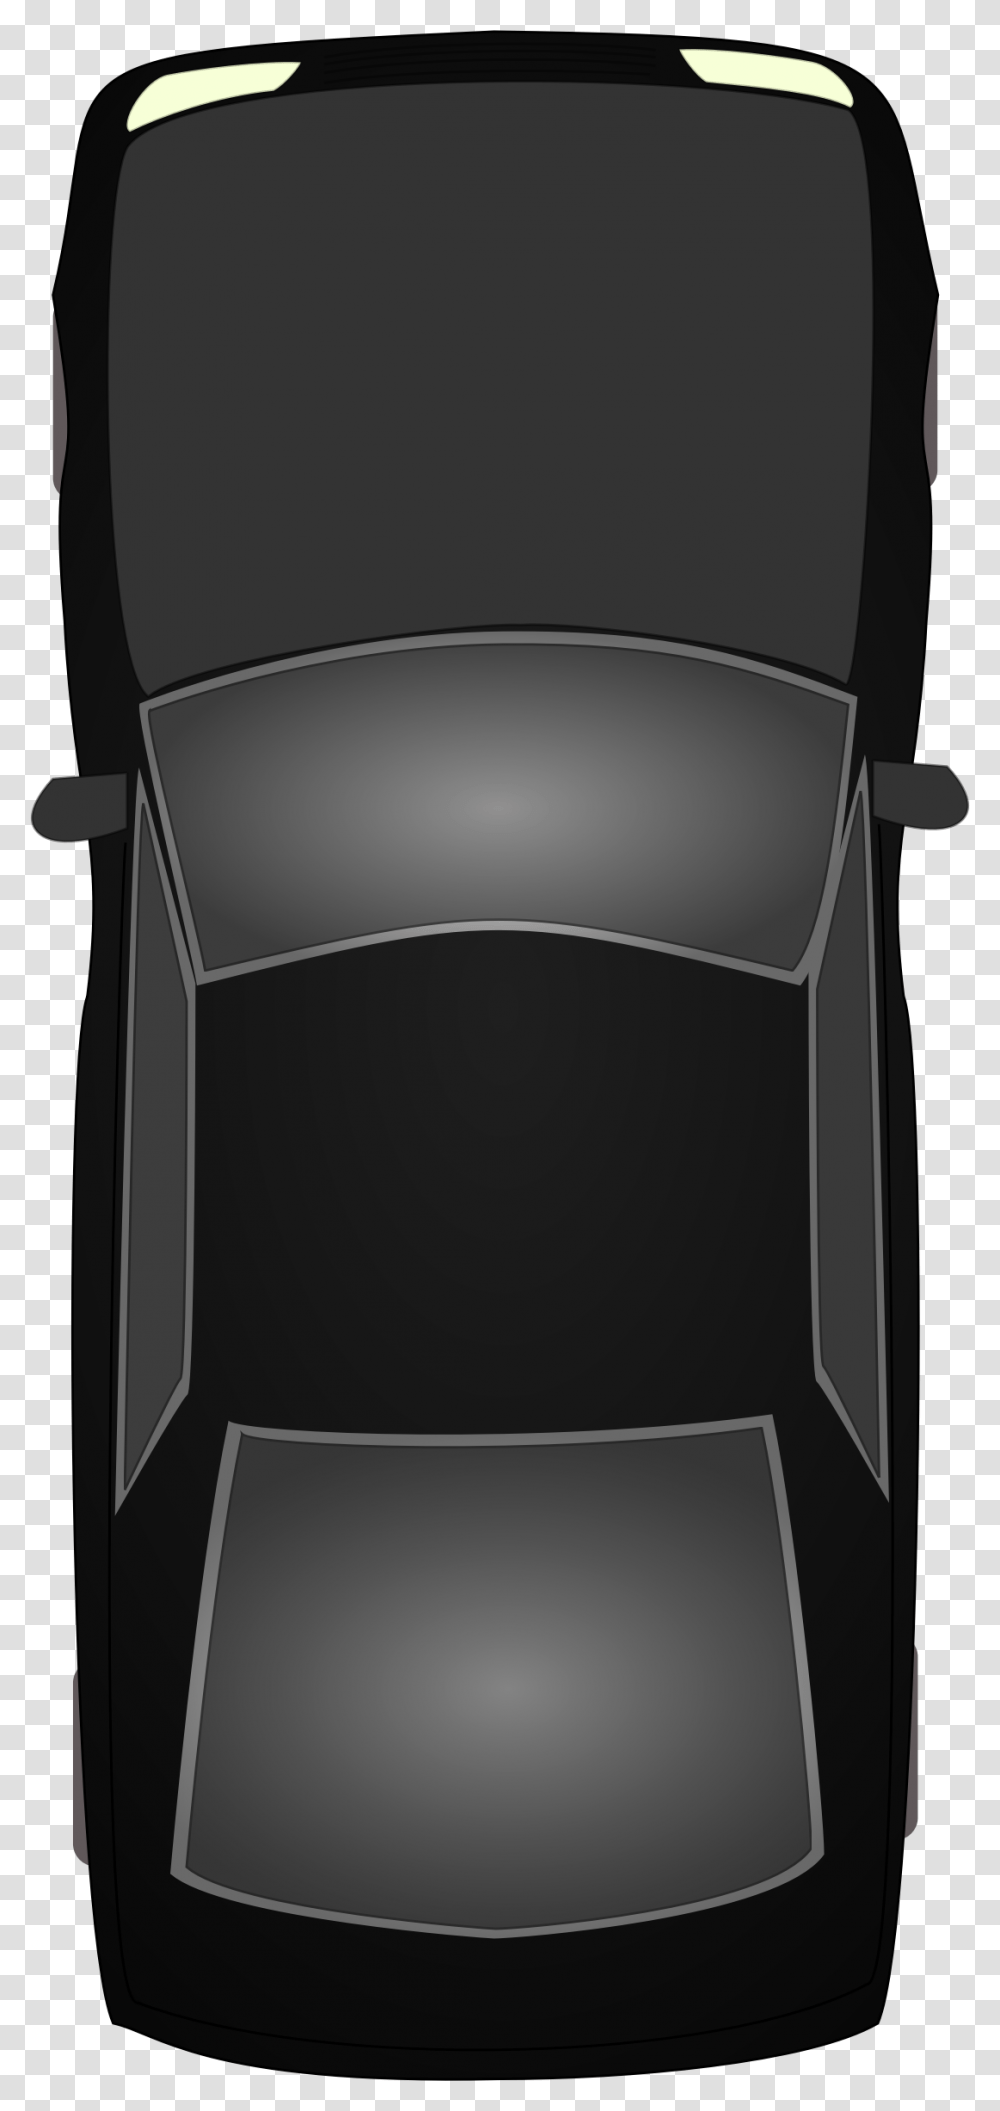 Black Car Topview Big Car Clipart Top View Black, Chair, Furniture, Lamp, Gray Transparent Png